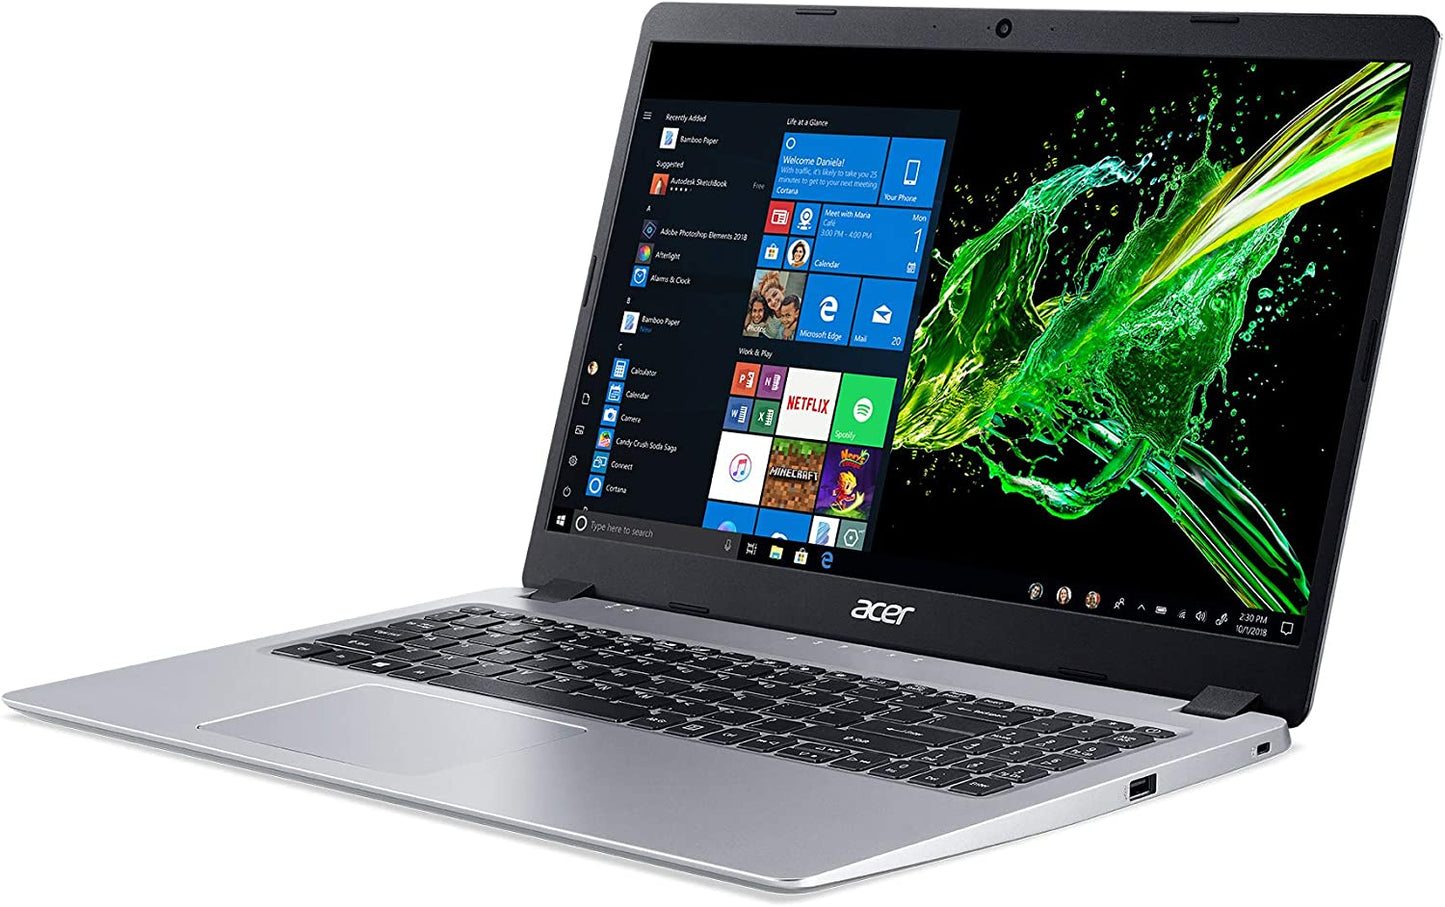 Aspire 5 Slim Laptop, 15.6 Inches Full HD IPS Display, AMD Ryzen 3 3200U, Vega 3 Graphics, 4GB DDR4, 128GB SSD, Backlit Keyboard, Windows 10 in S Mode, A515-43-R19L, Silver